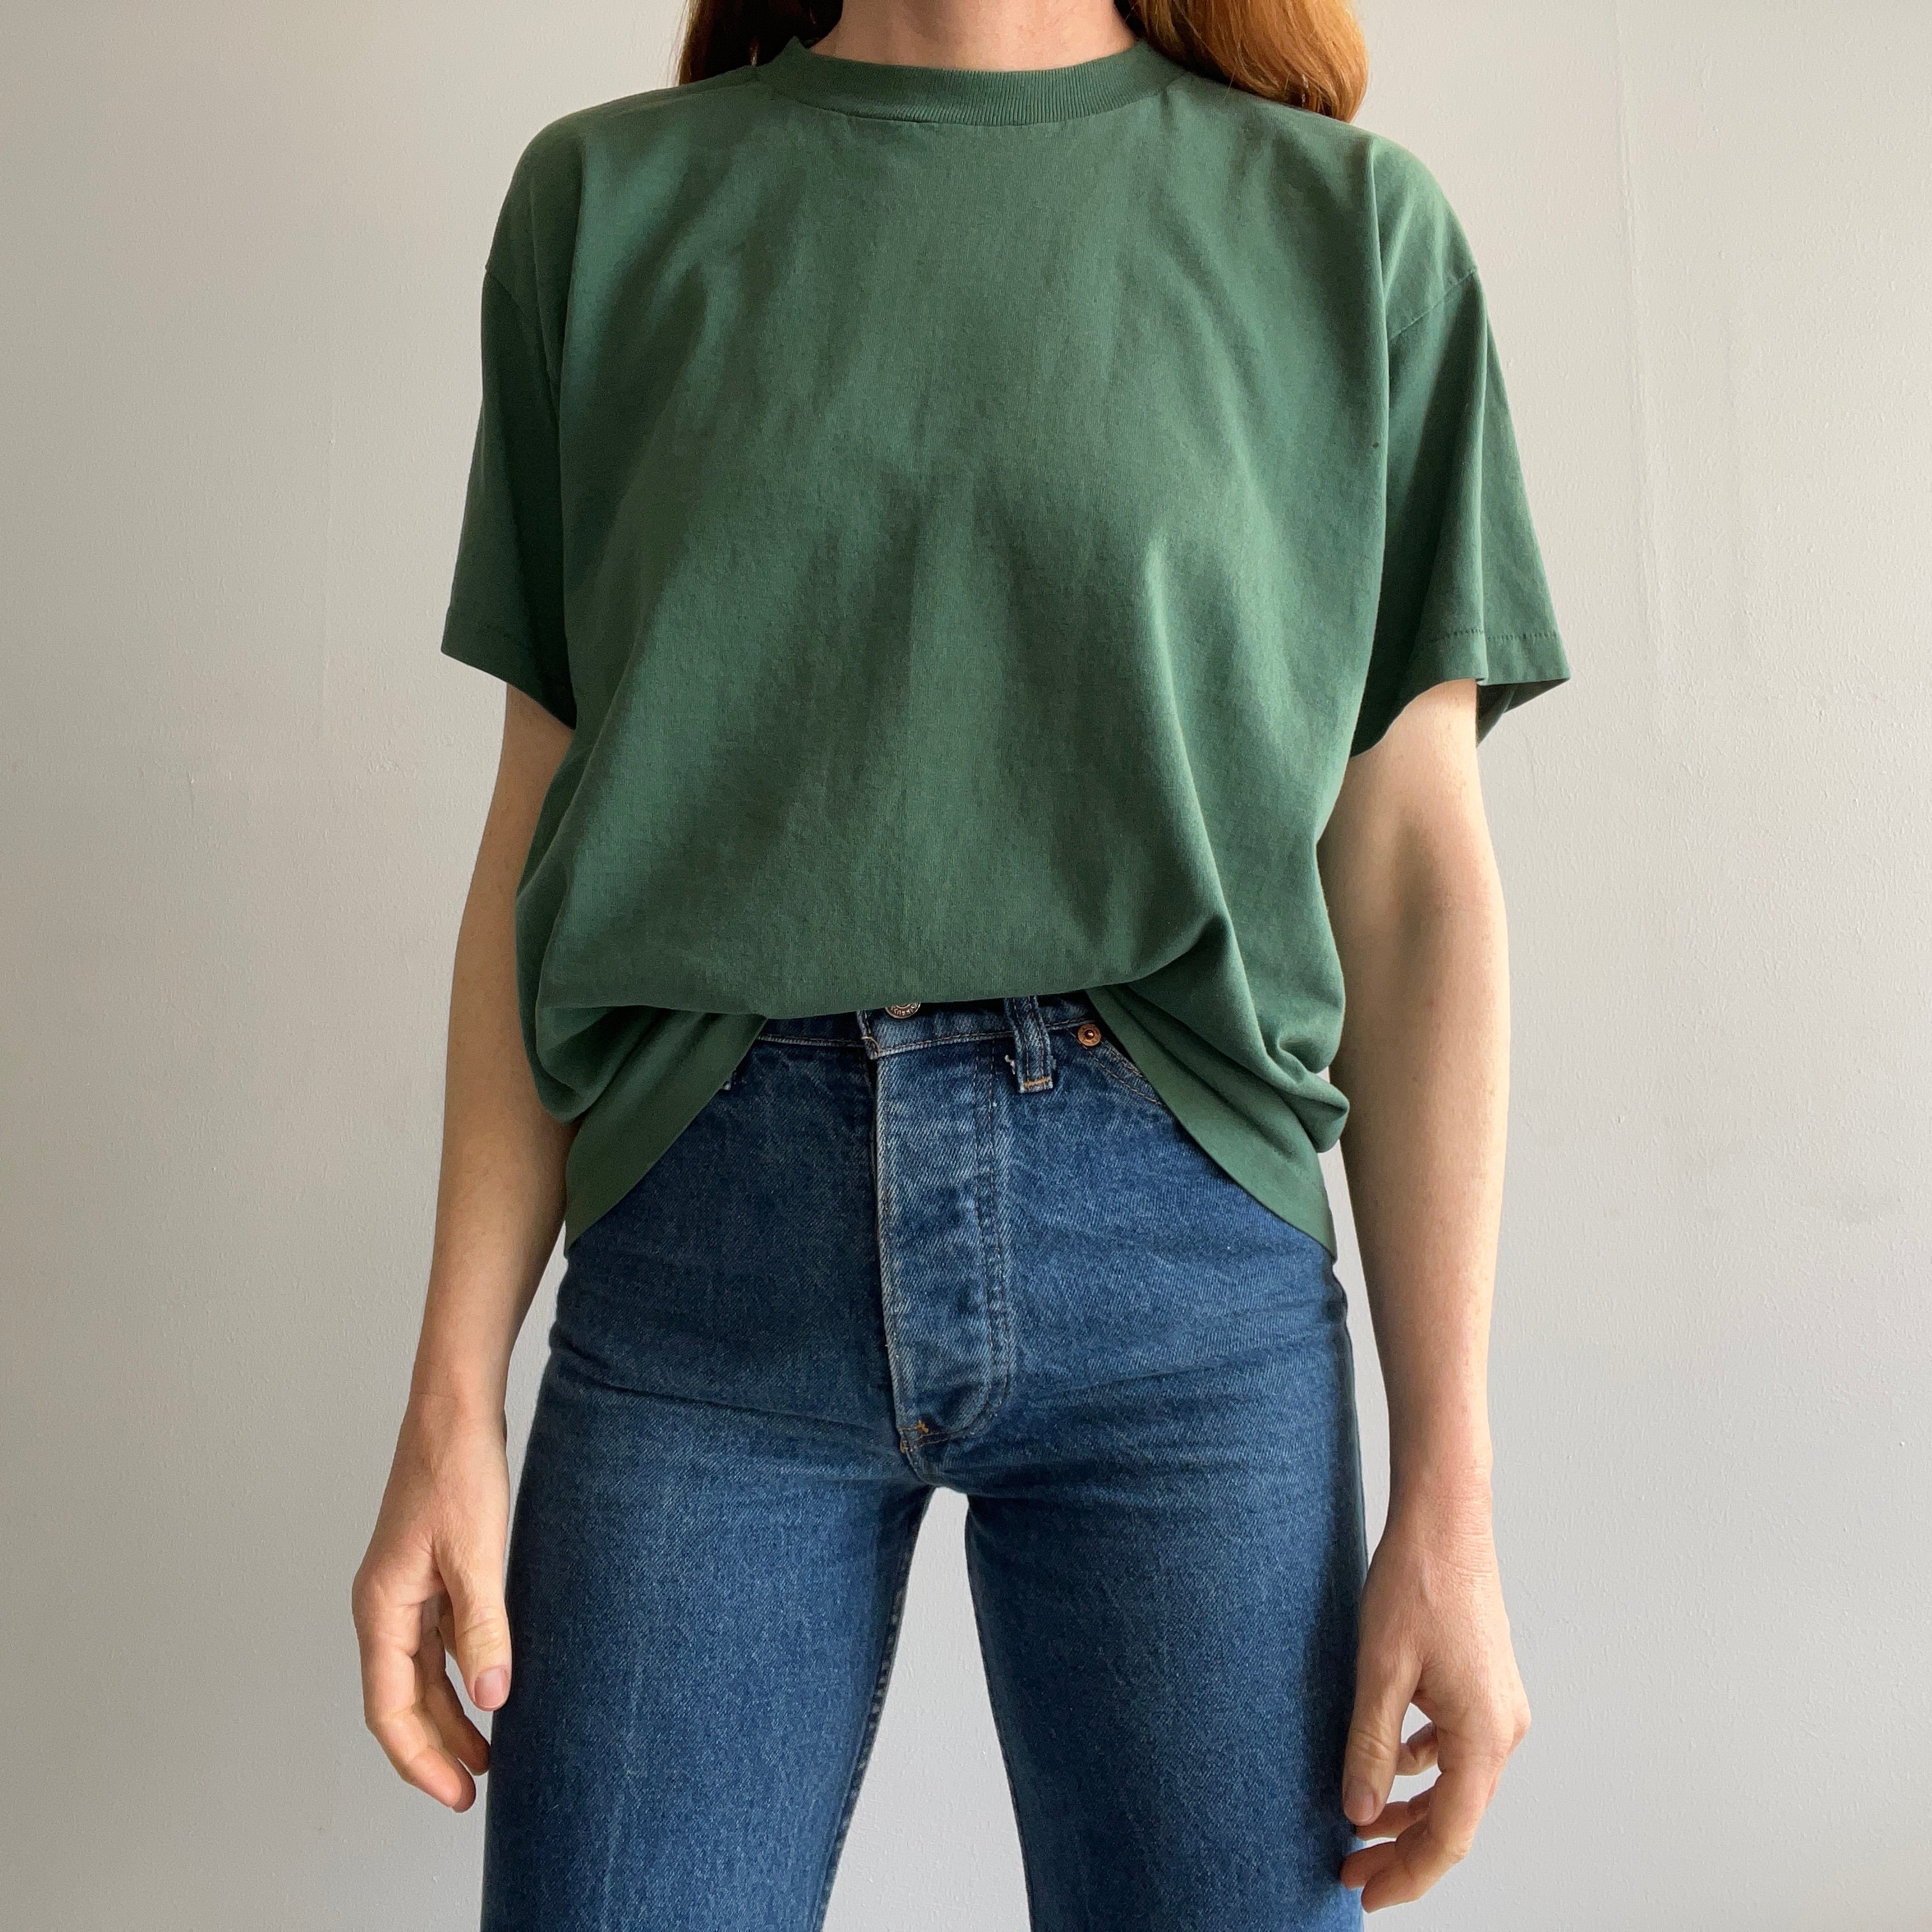 1980s Blank Dark Green Cotton T-Shirt